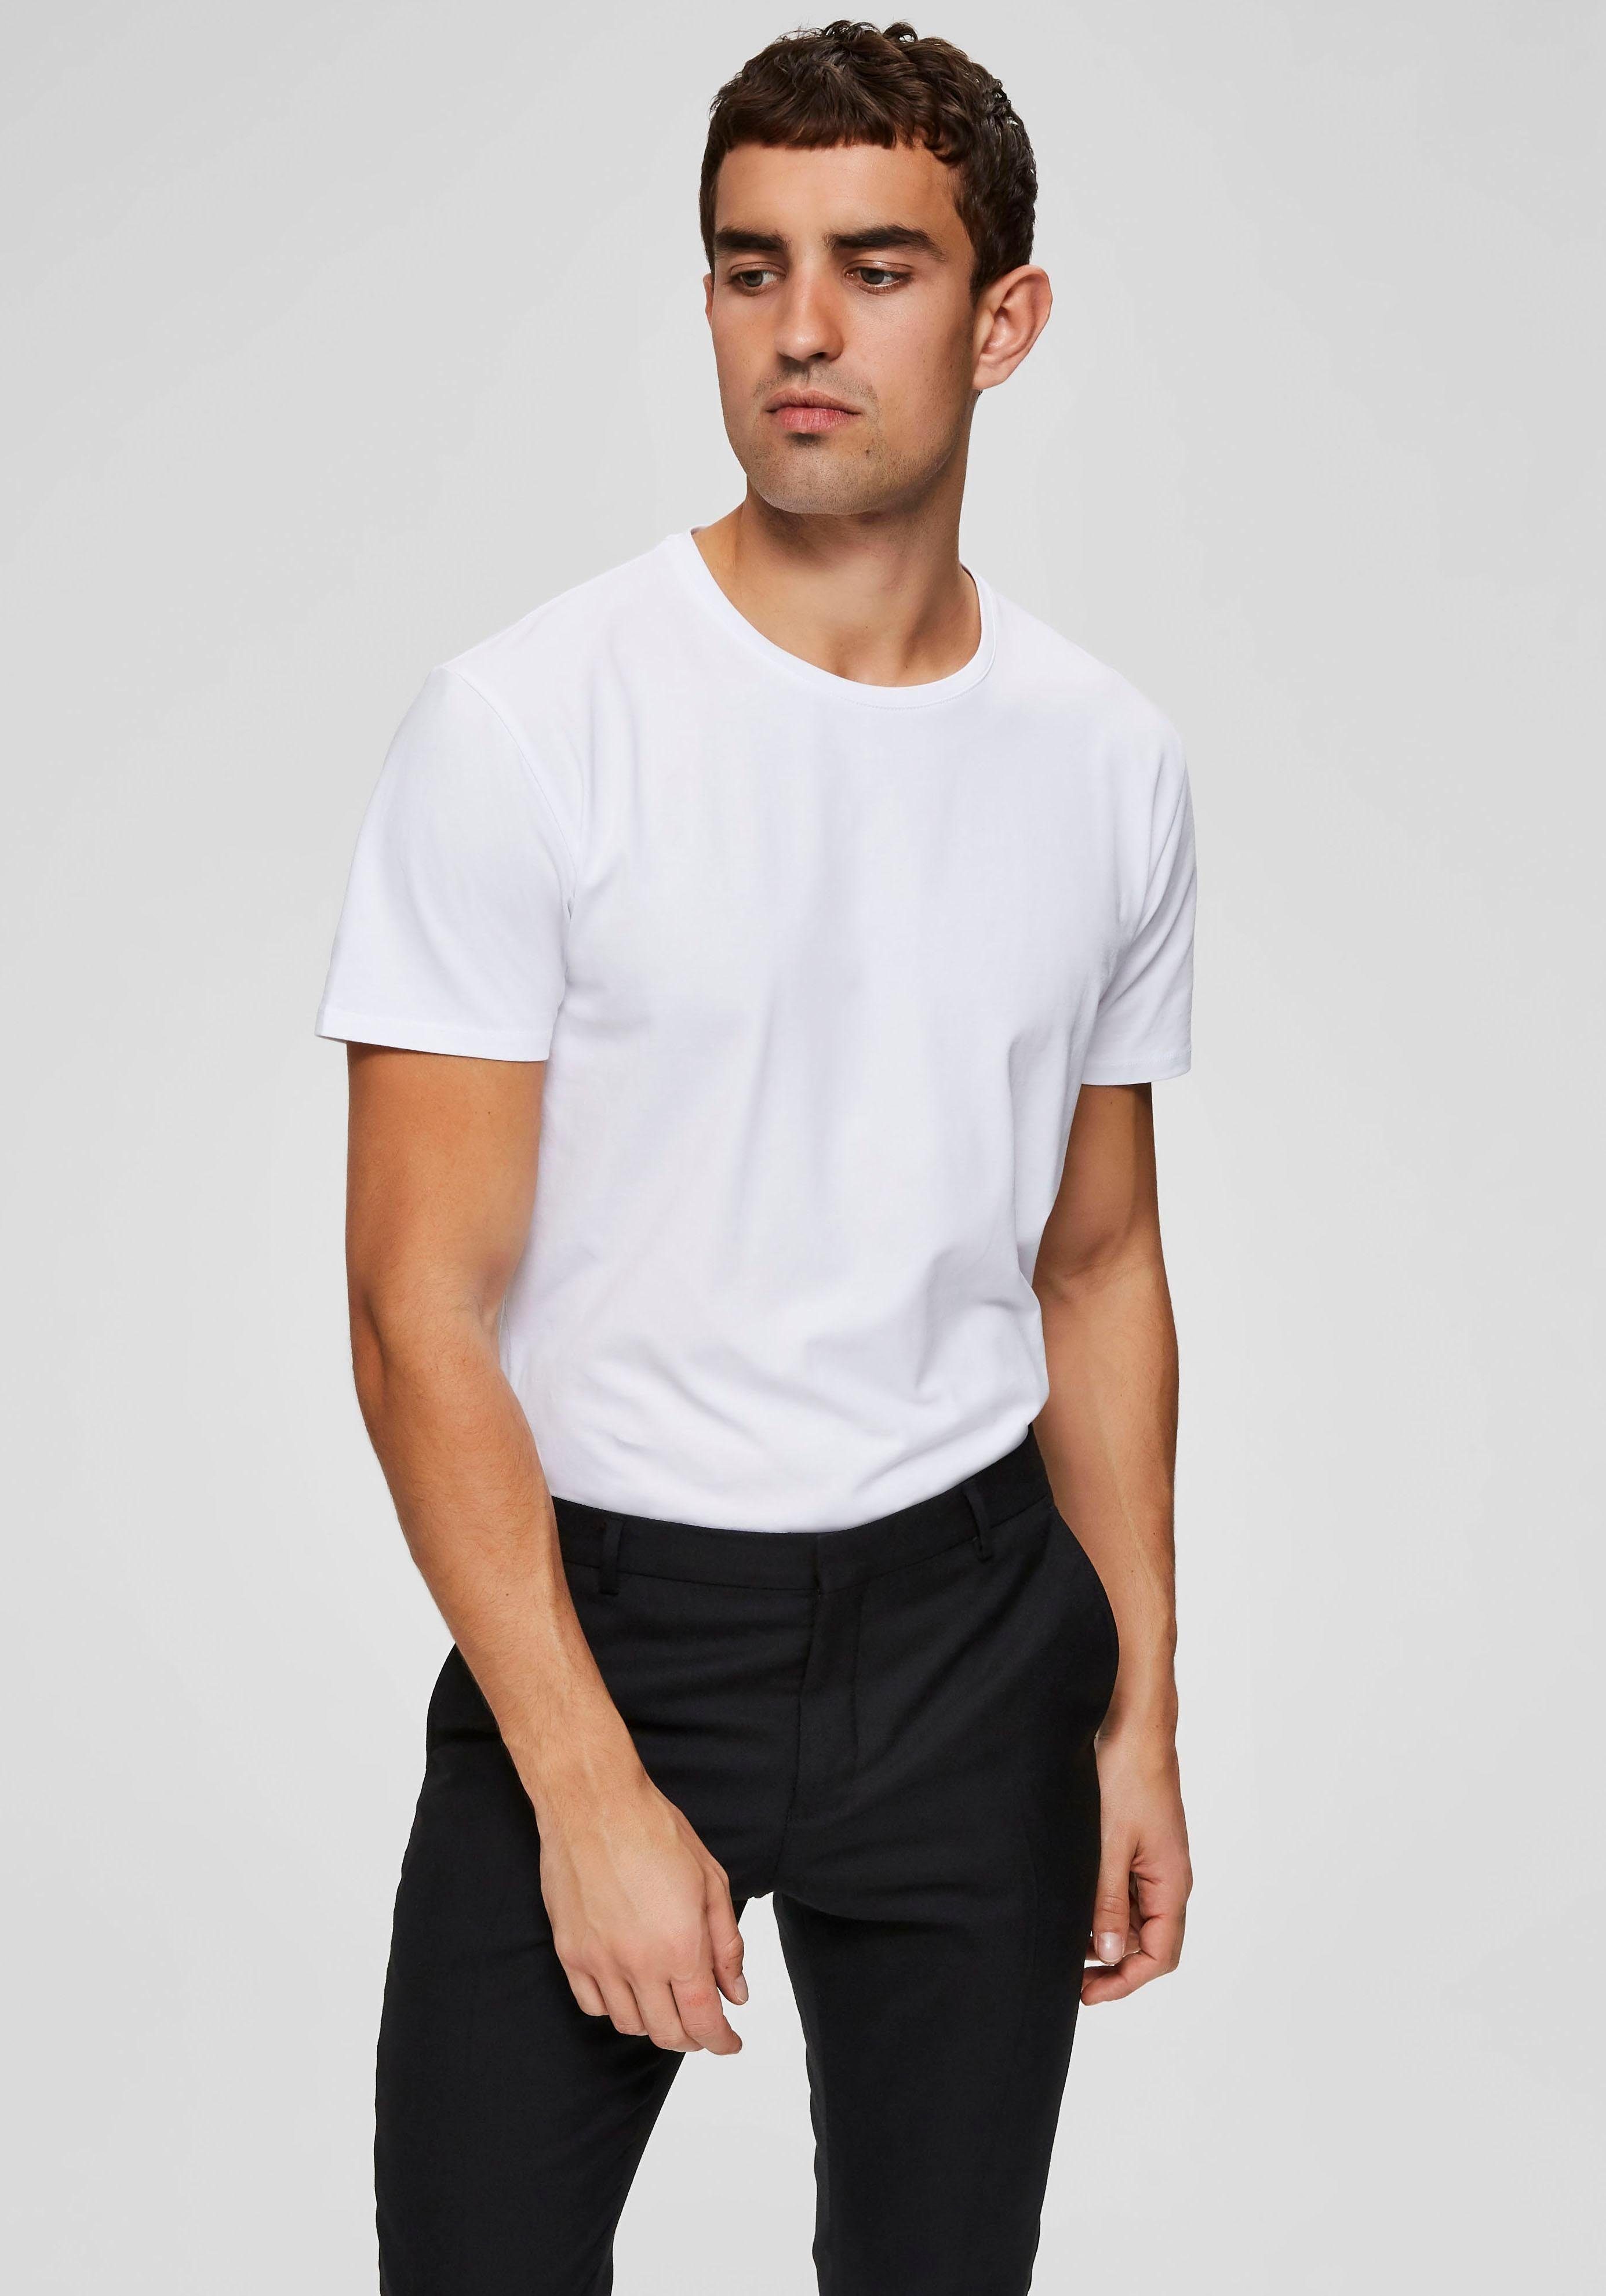 White SELECTED Basic Rundhalsshirt T-Shirt Bright HOMME